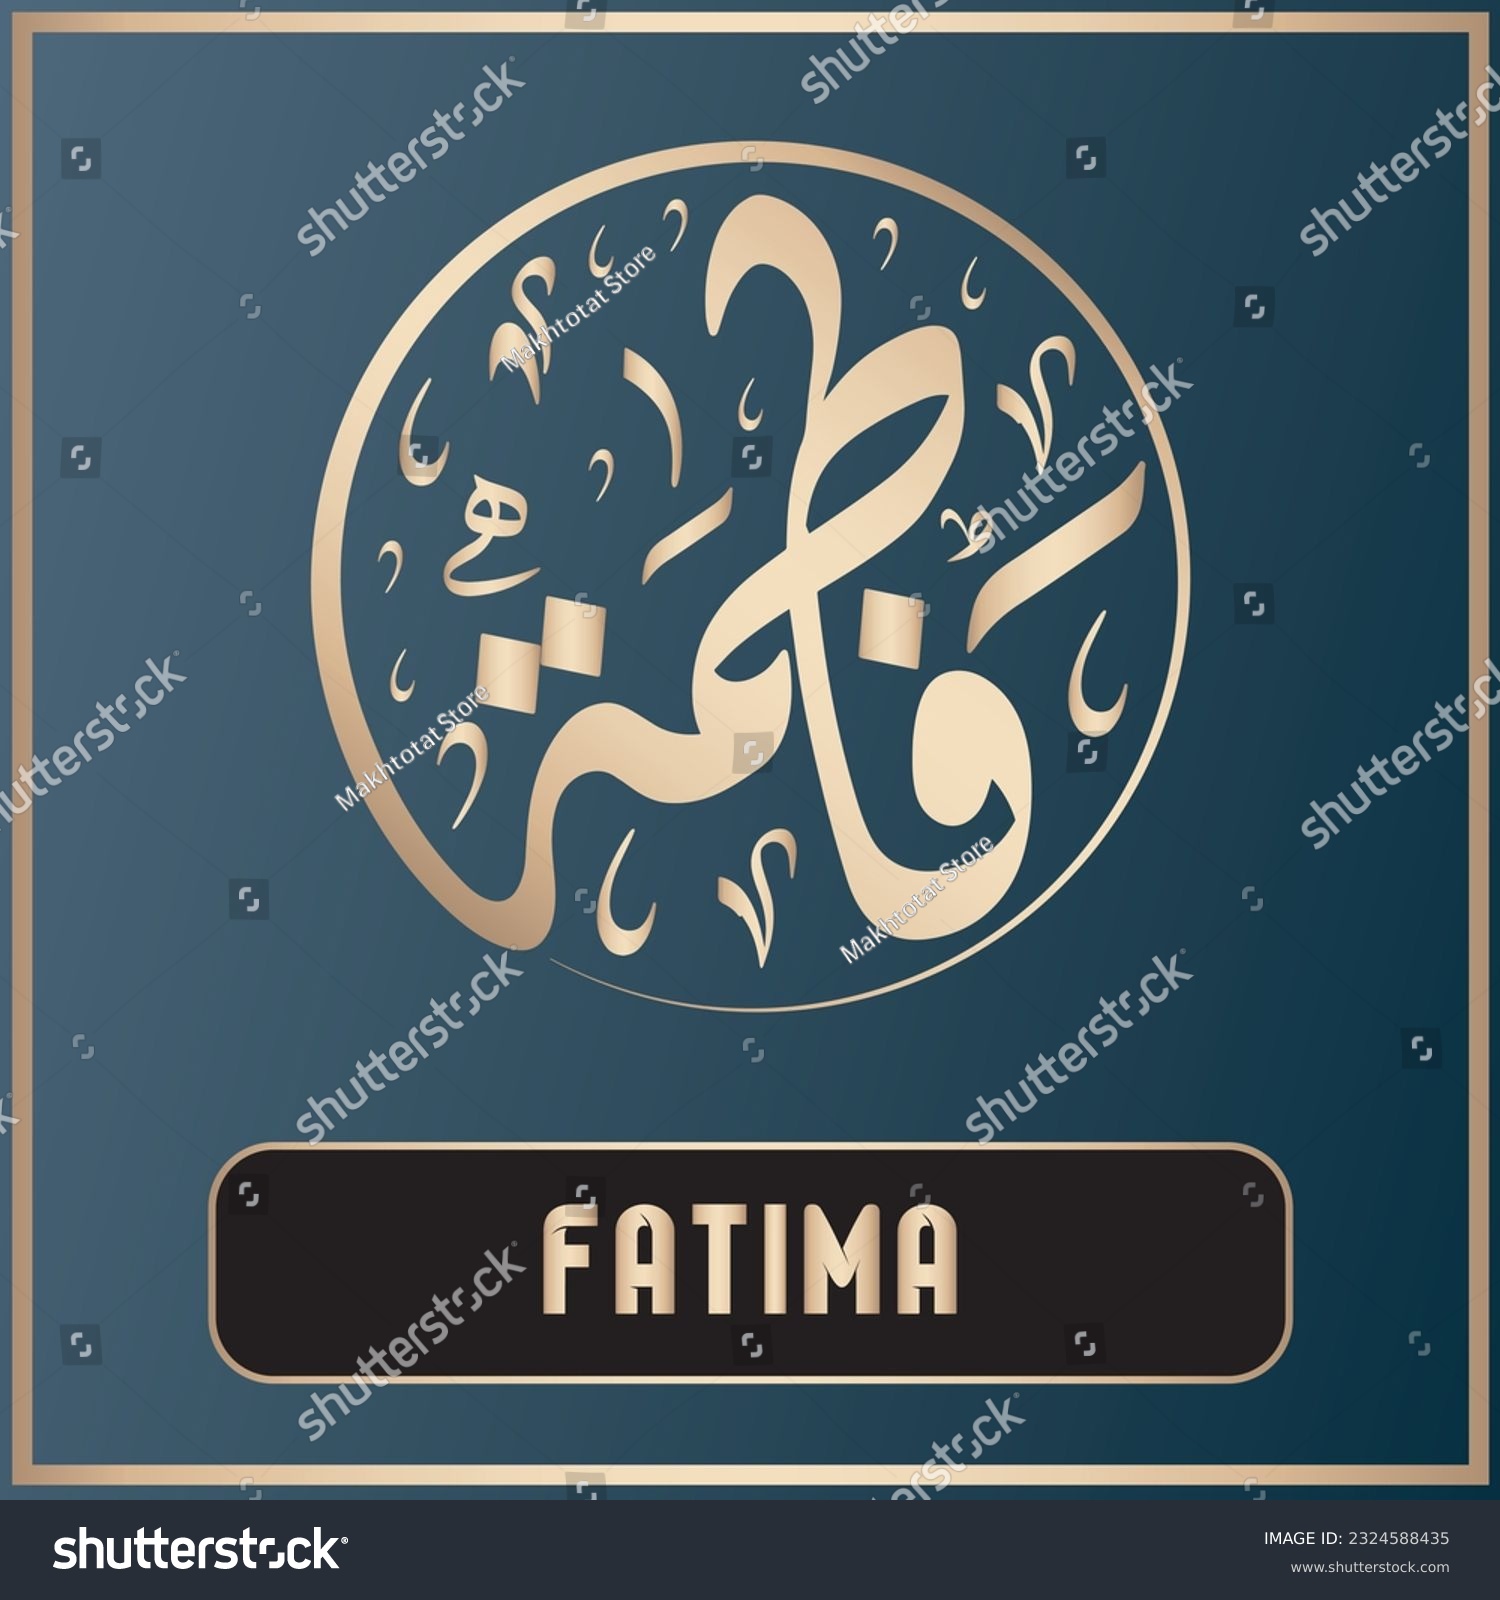 Arabic Calligraphy Name mean Fatima #2324588435